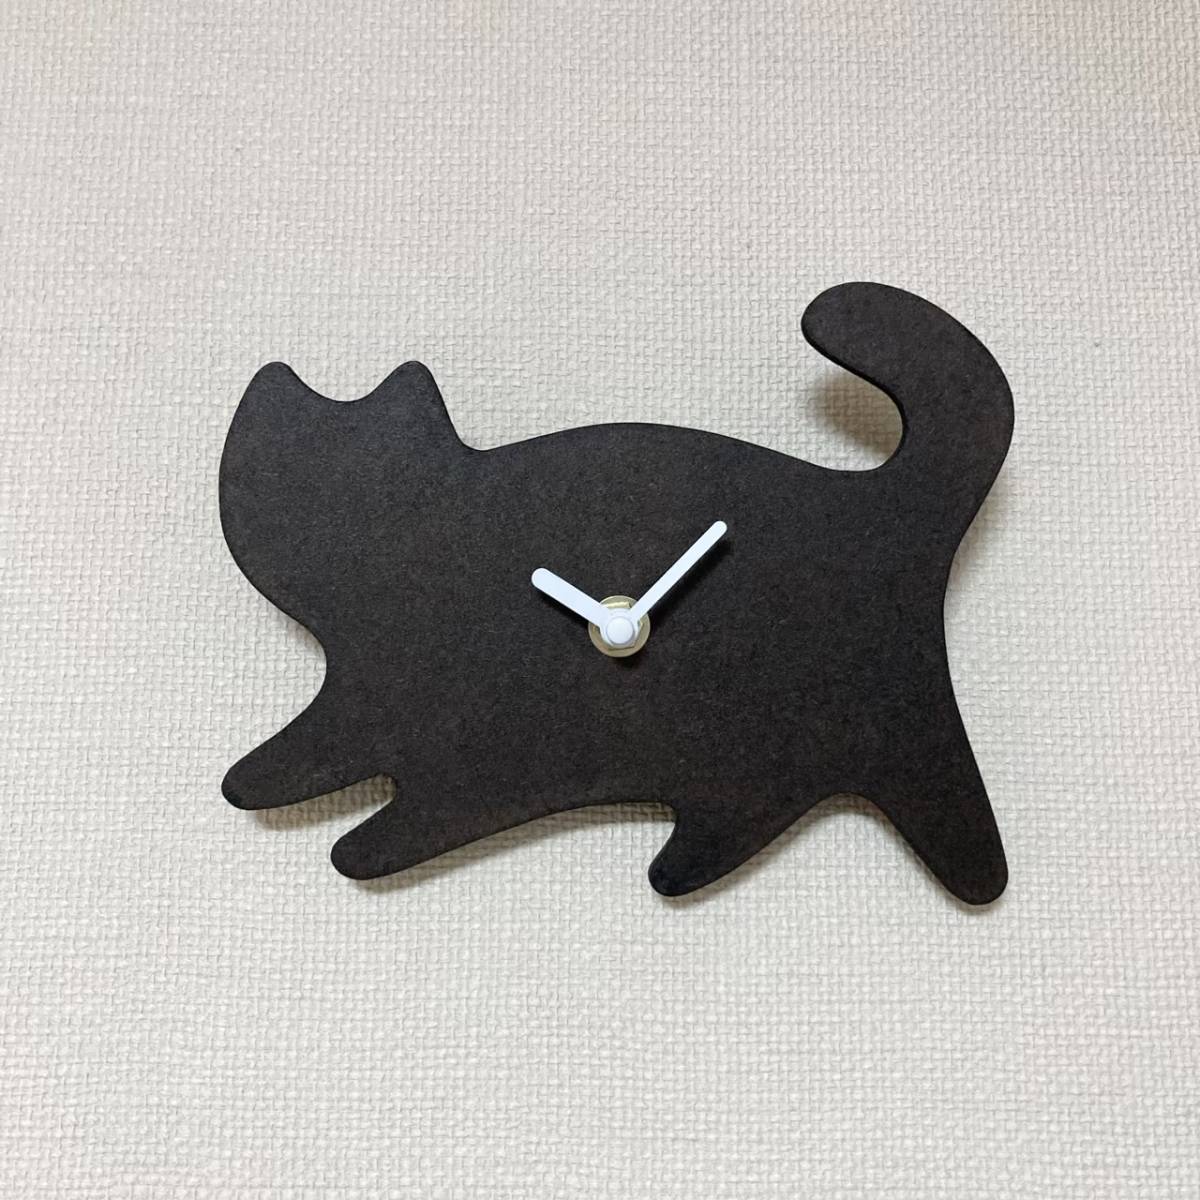 Black cat wall clock Kuroneko handmade object, Table clock, Wall clock, Wall clock, wall clock, analog